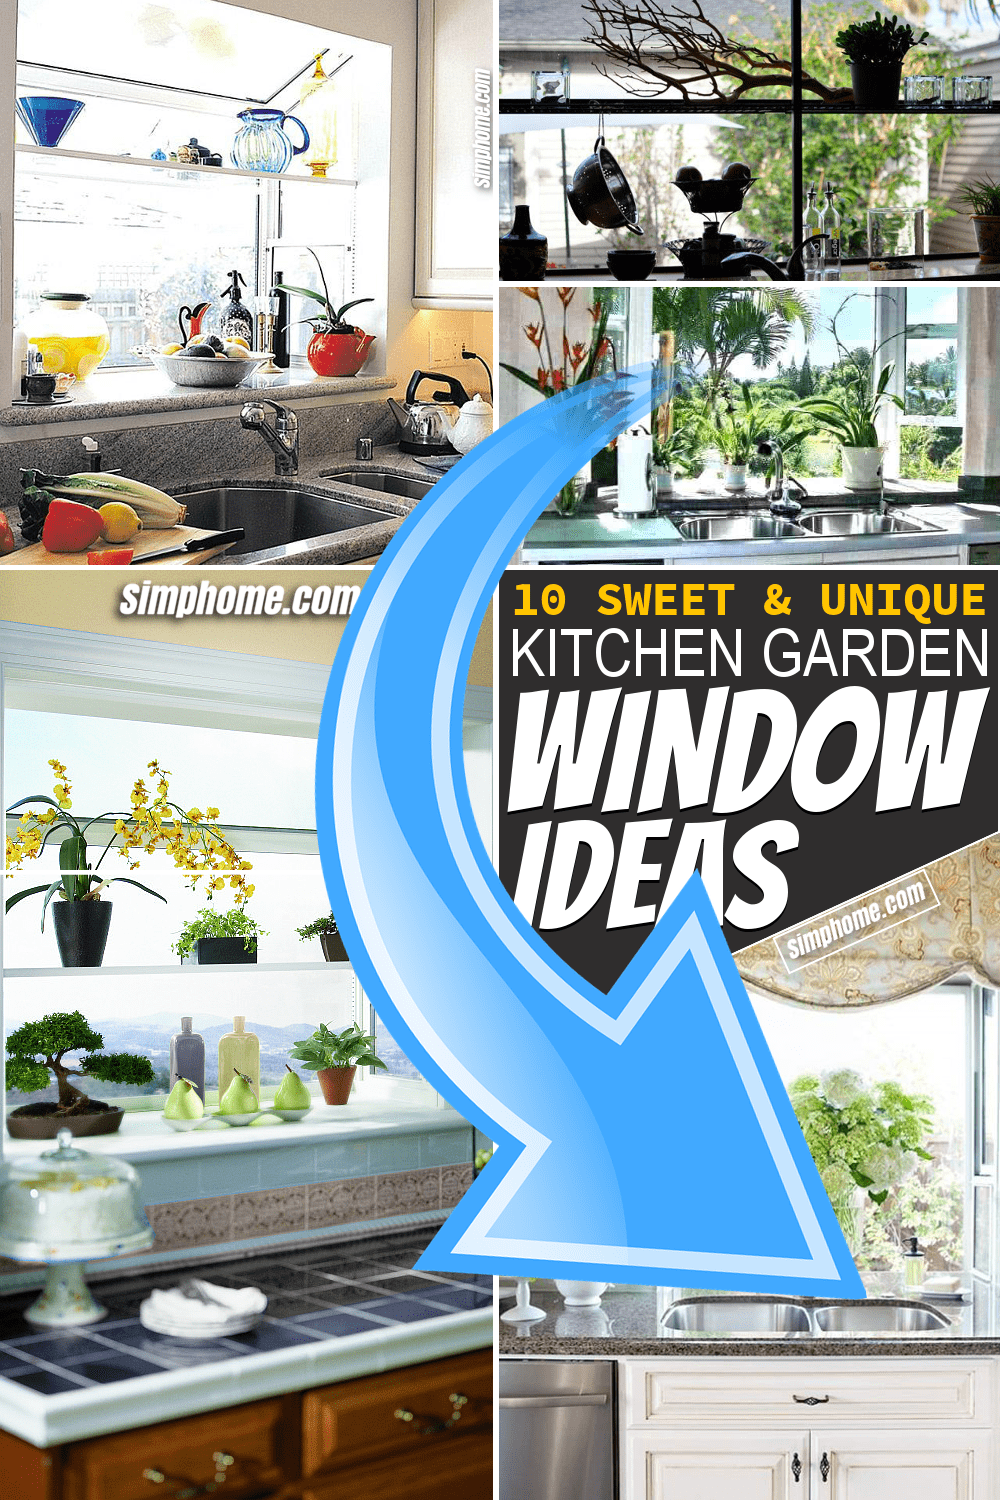 Simphome.com 10 Kitchen Garden Window Ideas Featured image